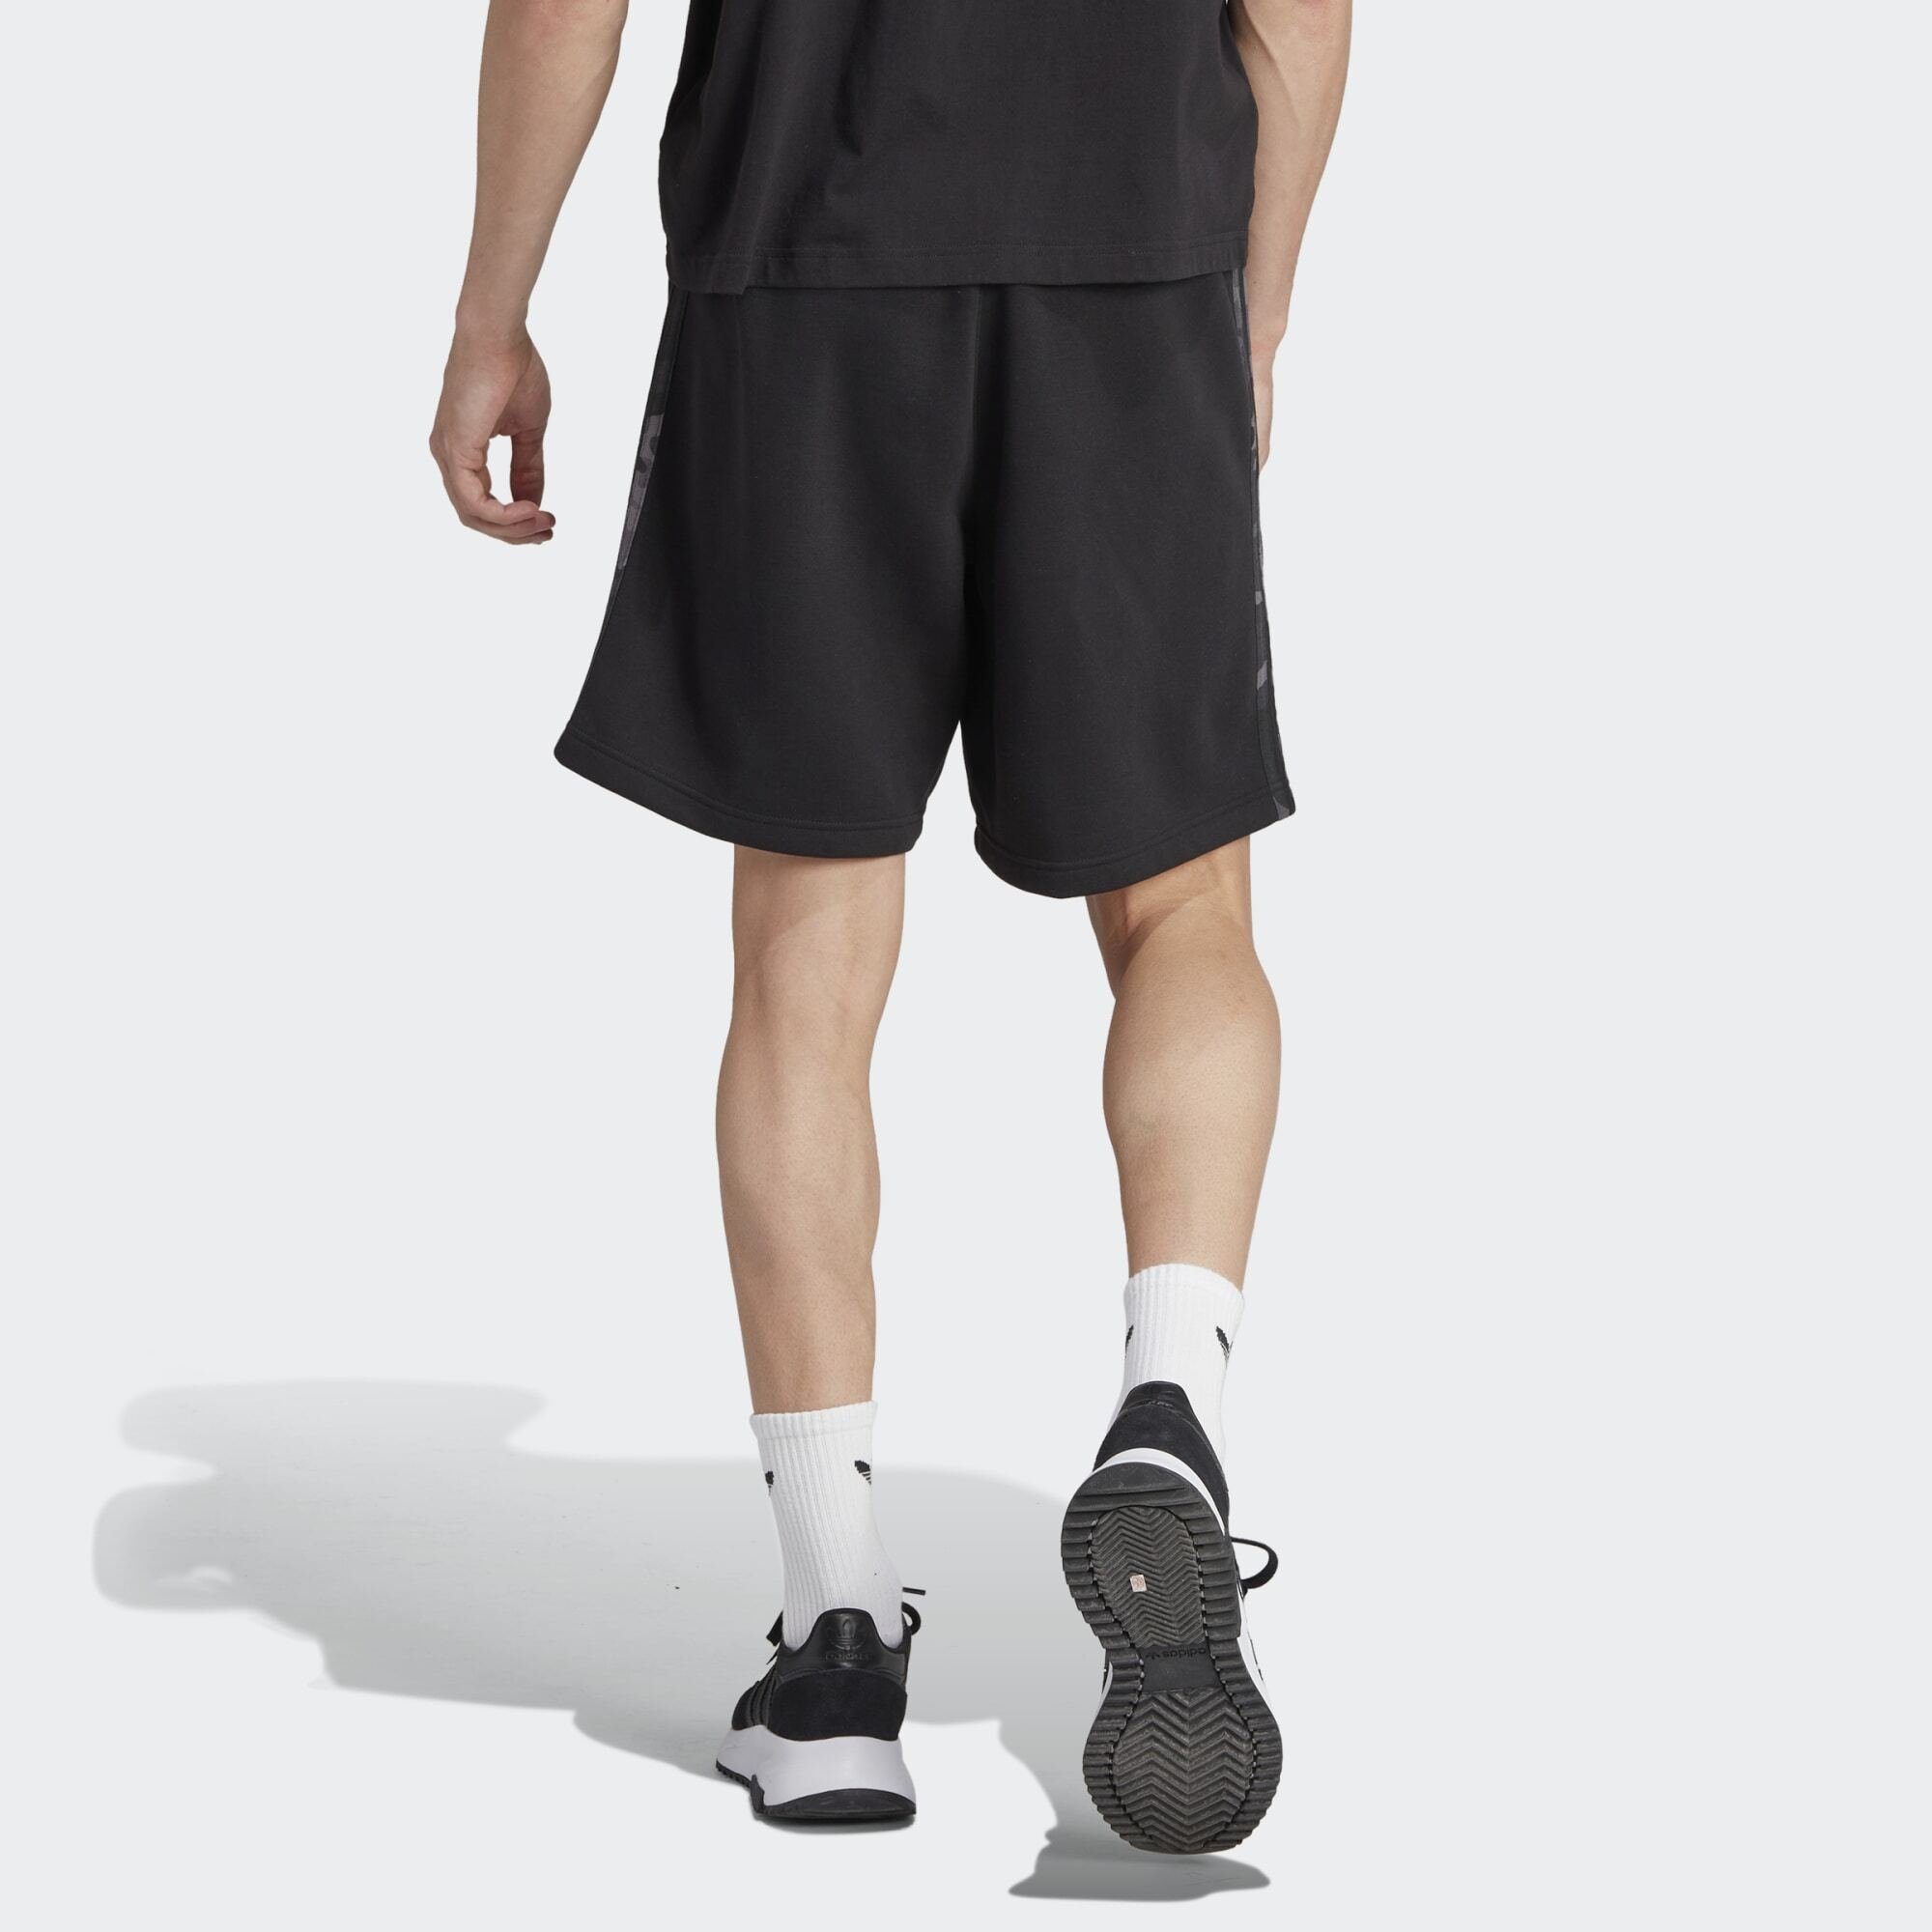 STRIPE adidas SHORTS Shorts GRAPHICS Black CAMO Originals